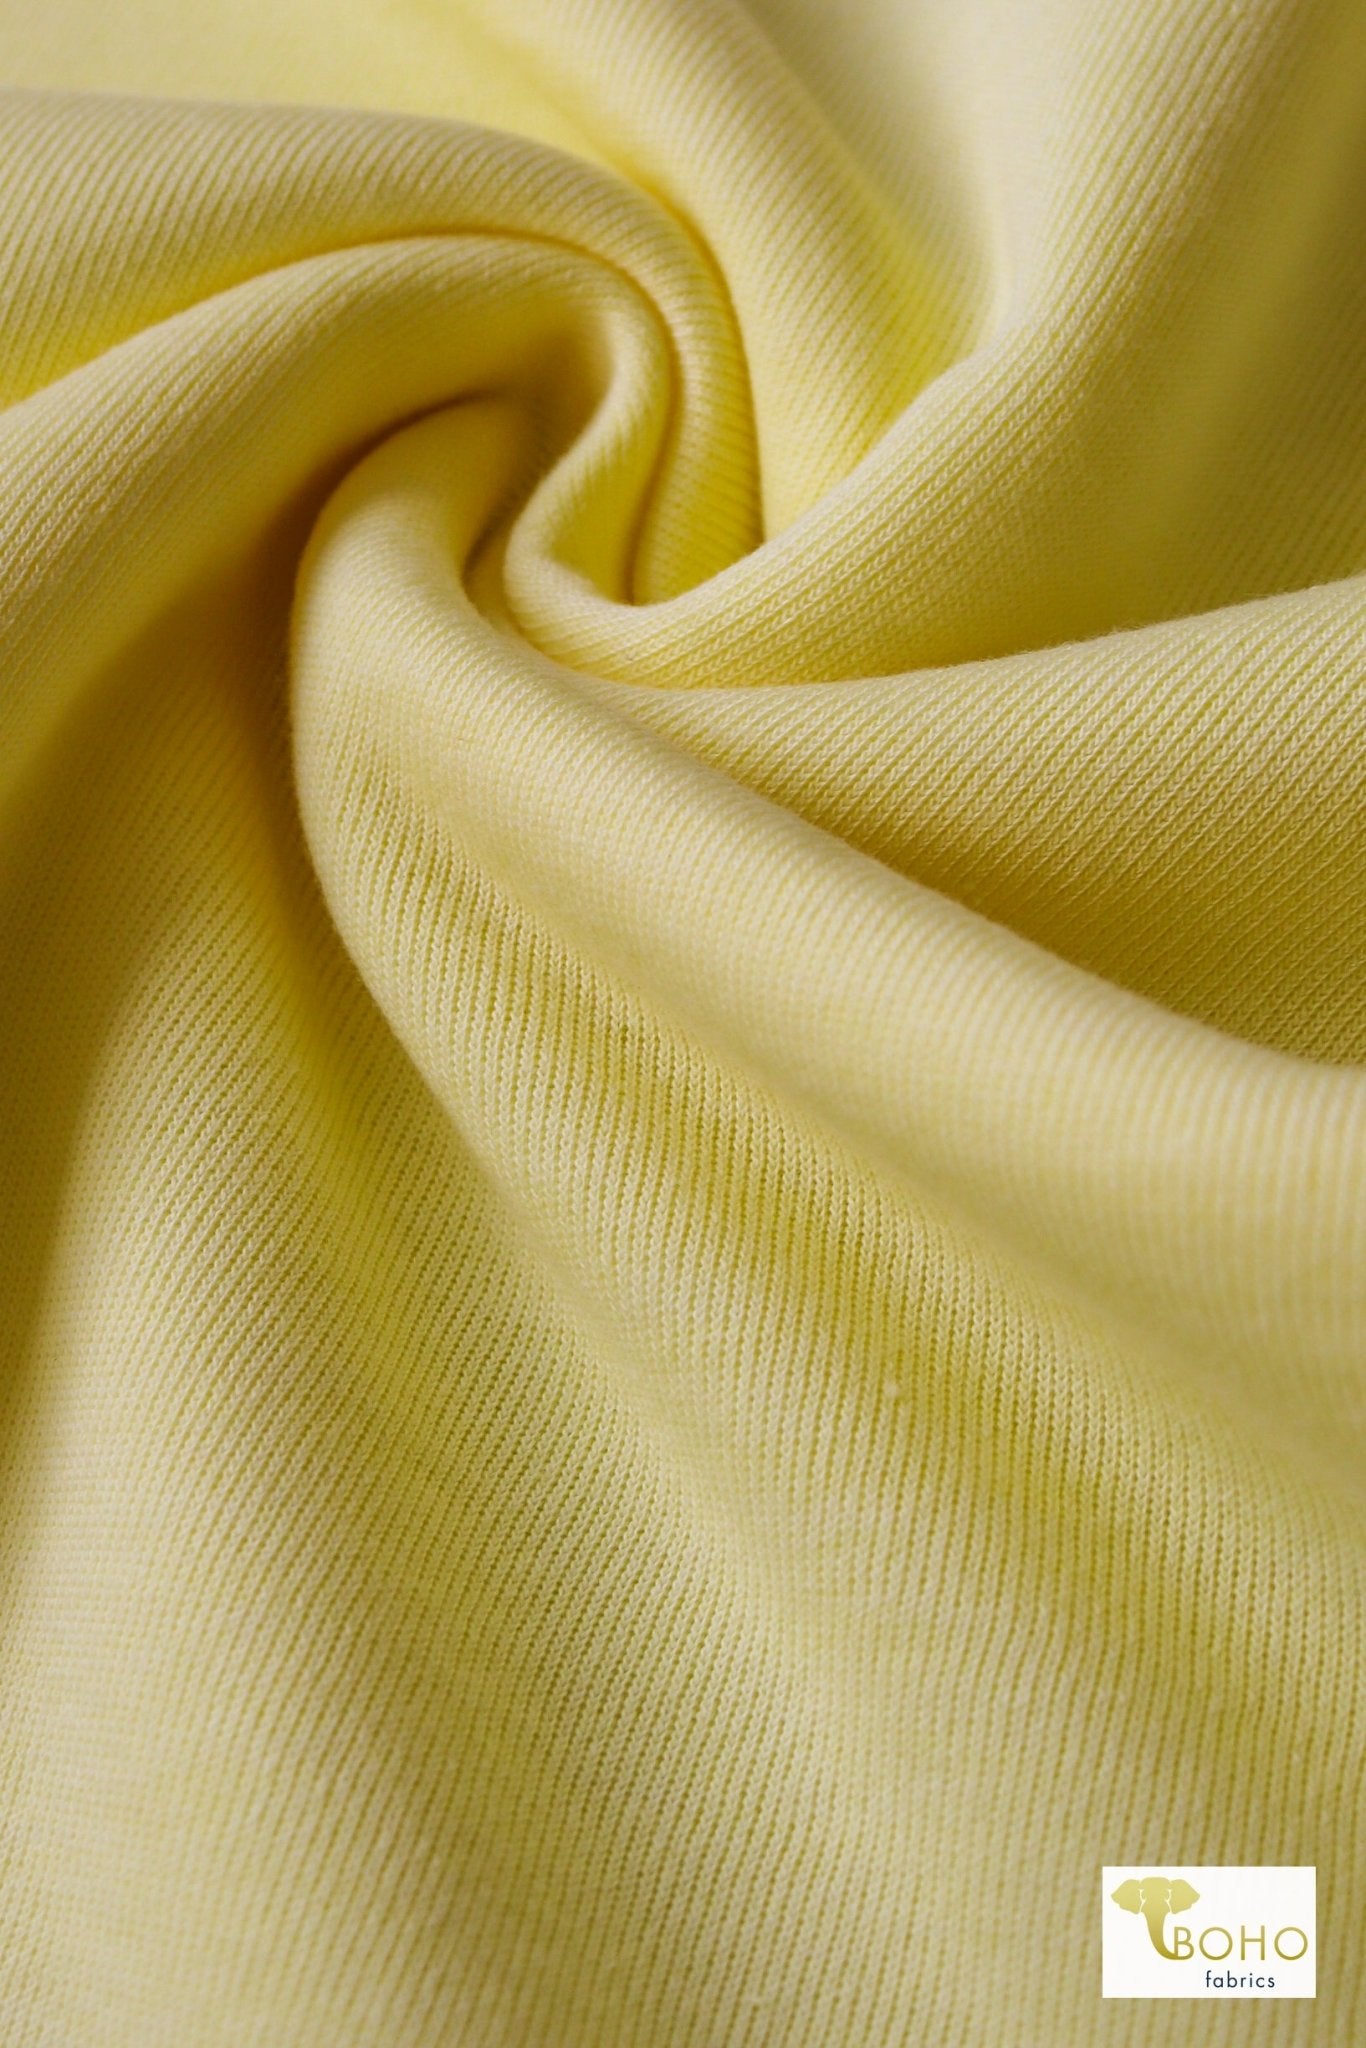 1x1 Rib Knit, Lemonade Yellow. SOLD BY THE HALF YARD! - Boho Fabrics